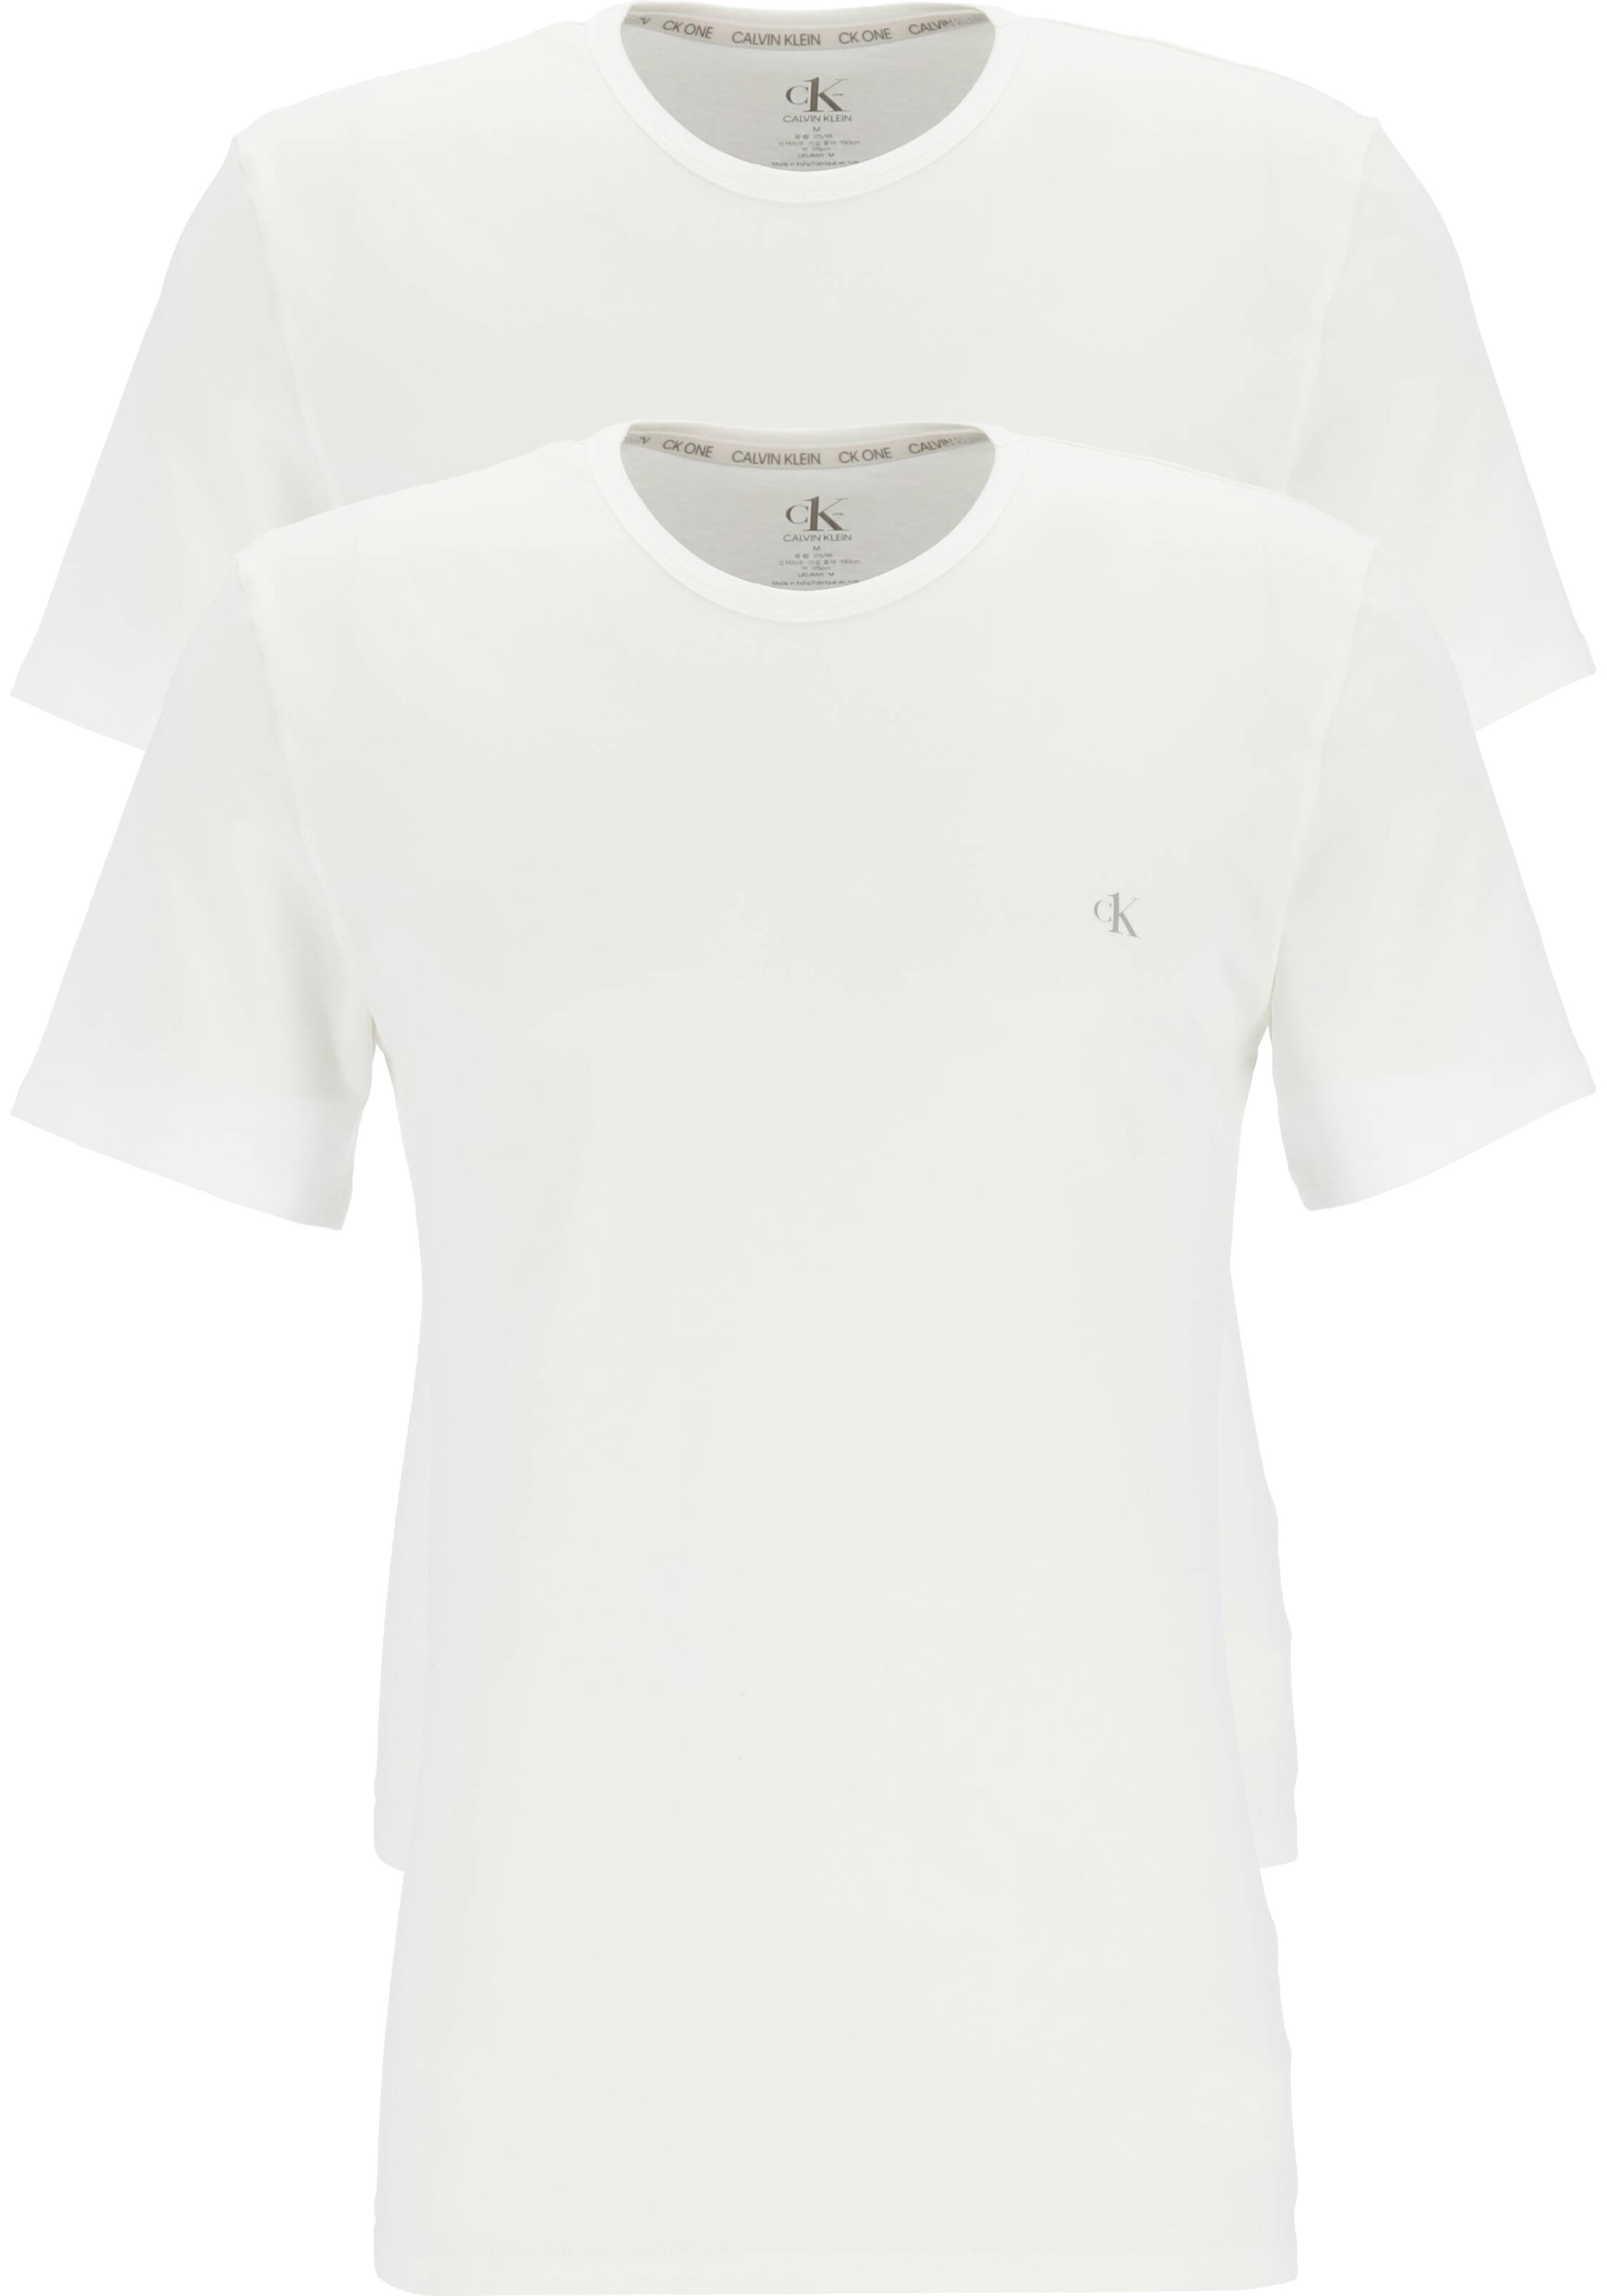 Calvin Klein CK ONE cotton crew neck T-shirts (2-pack), heren T-shirts... - DEALS: bestel vele artikelen topmerken met korting